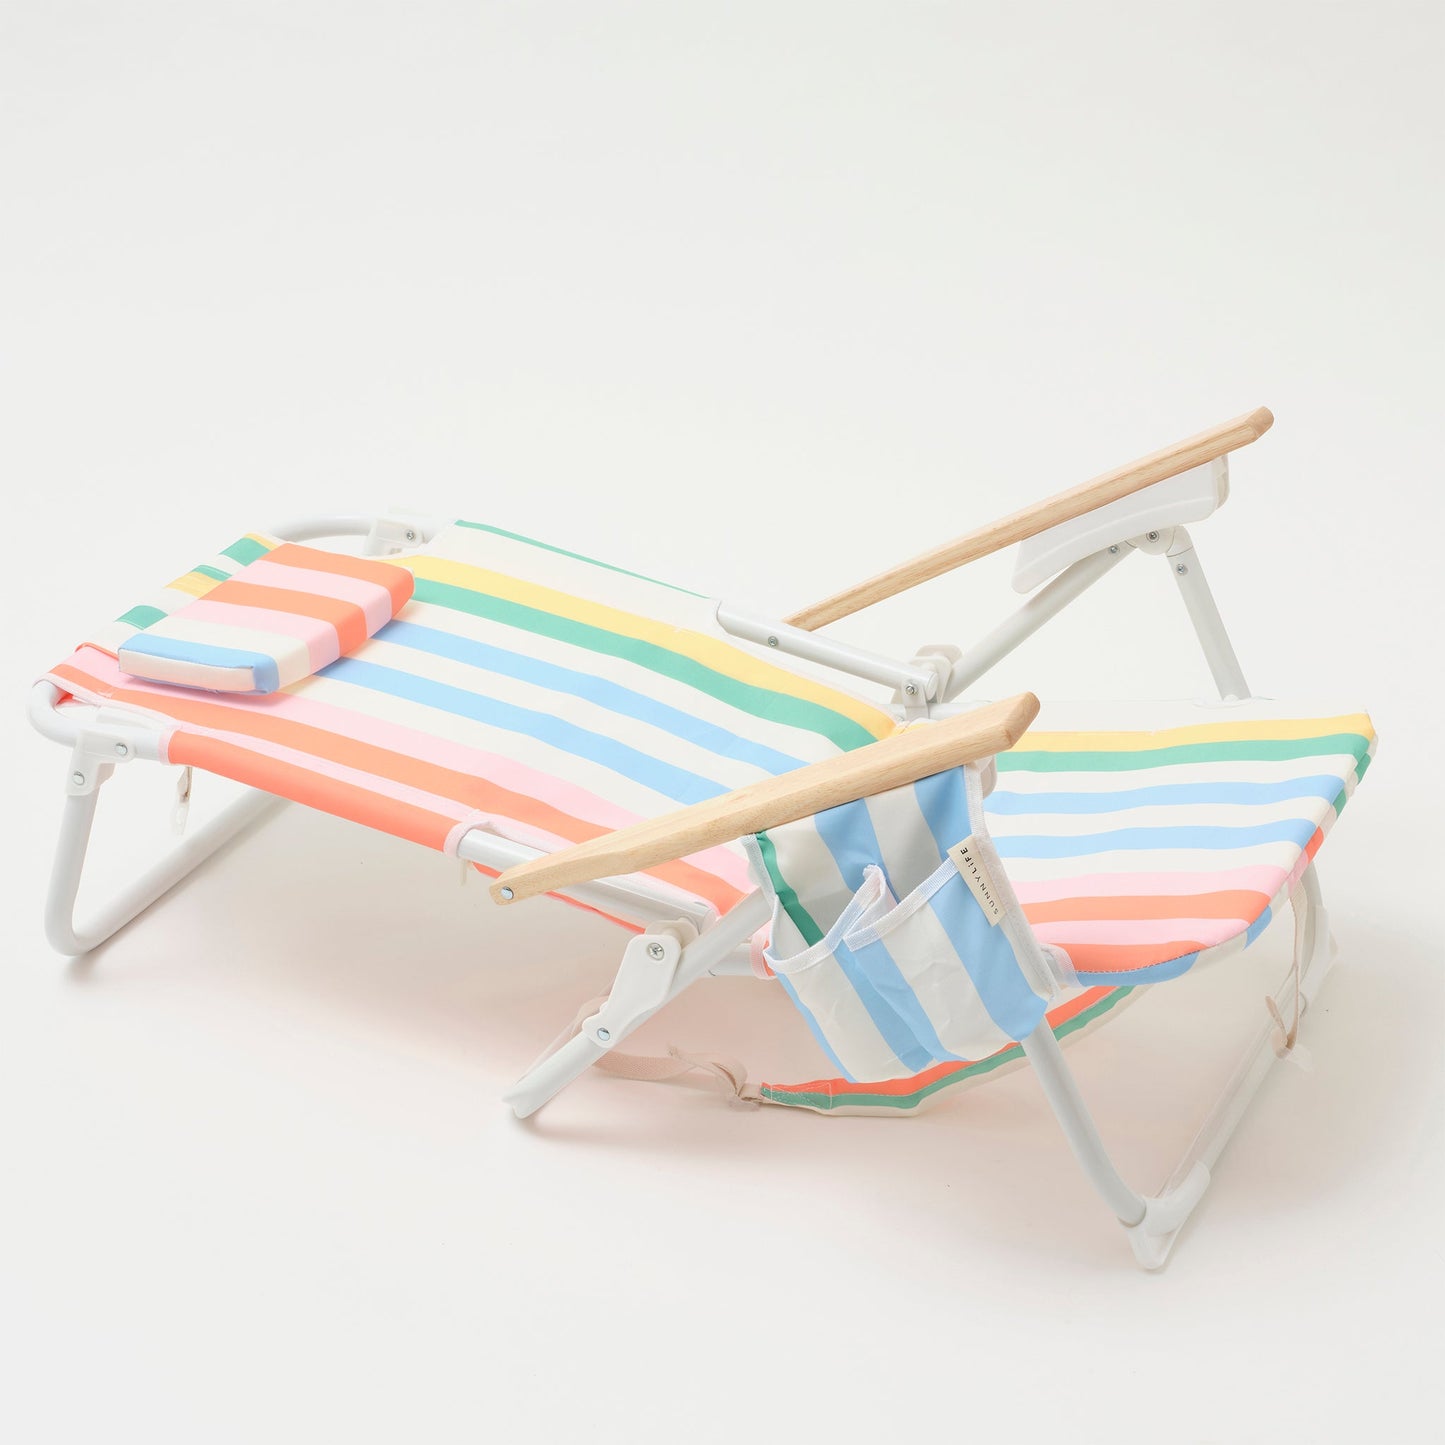 Deluxe Beach Chair - Utopia